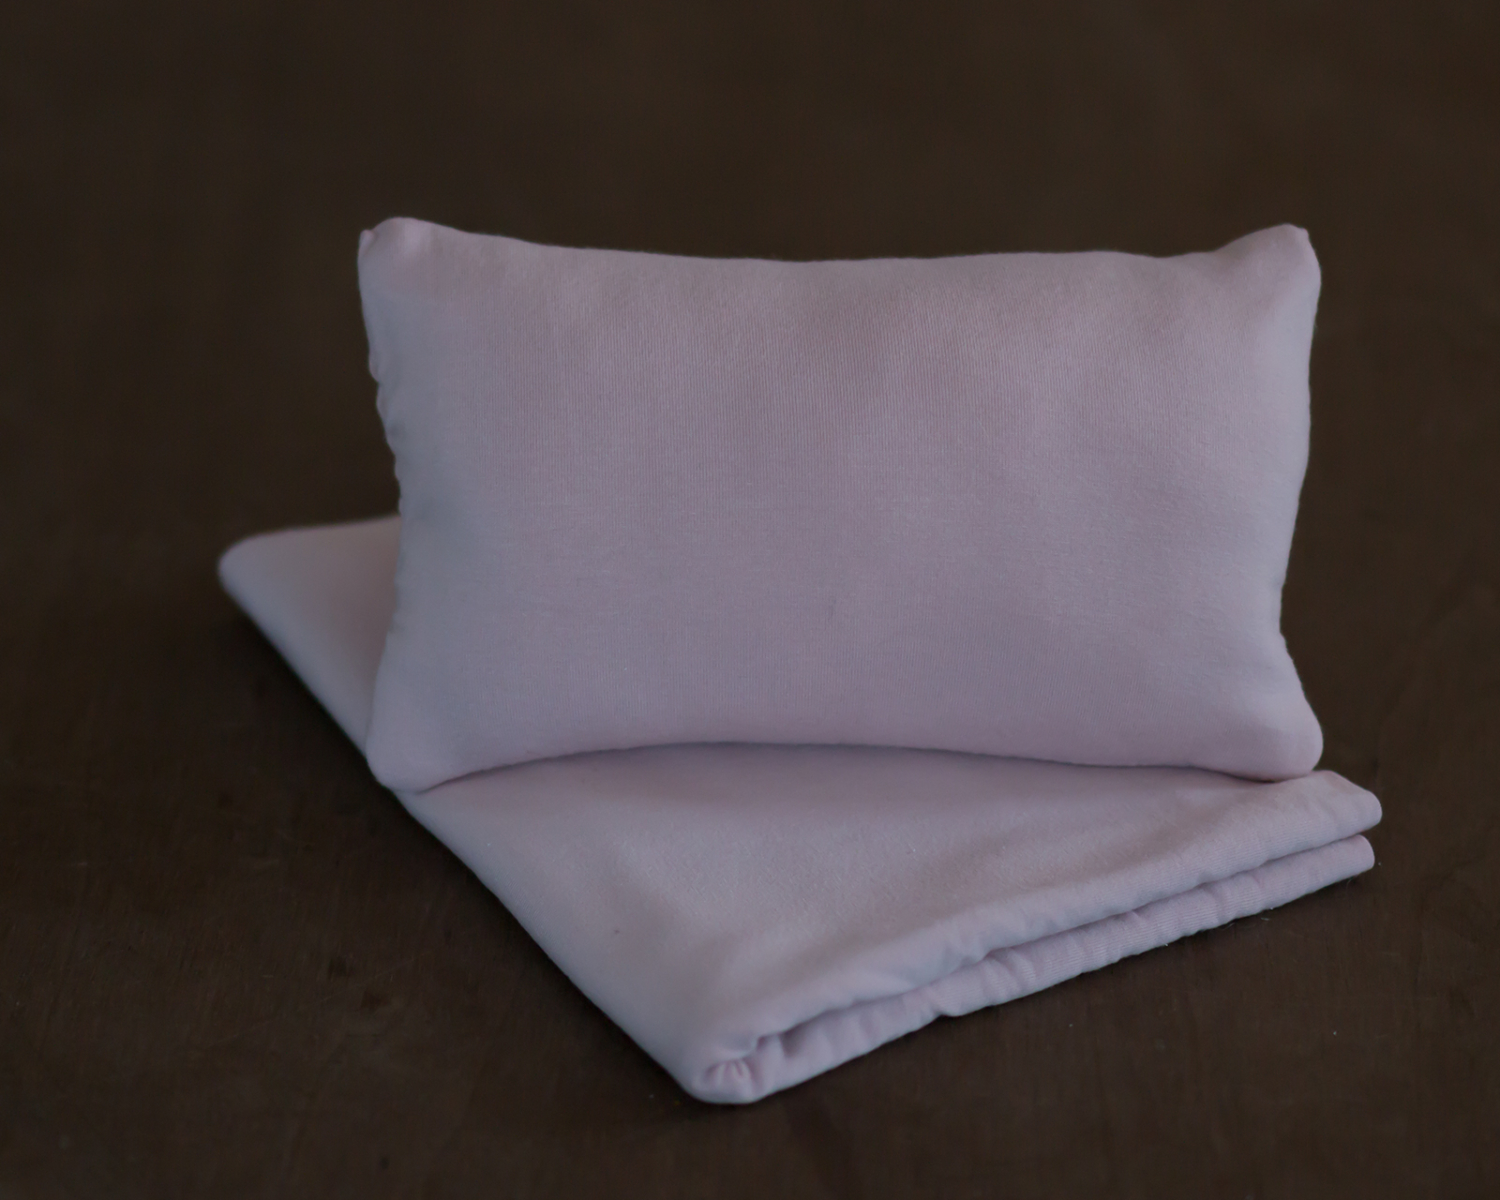 Pale blush posing pillow - newborn photo prop